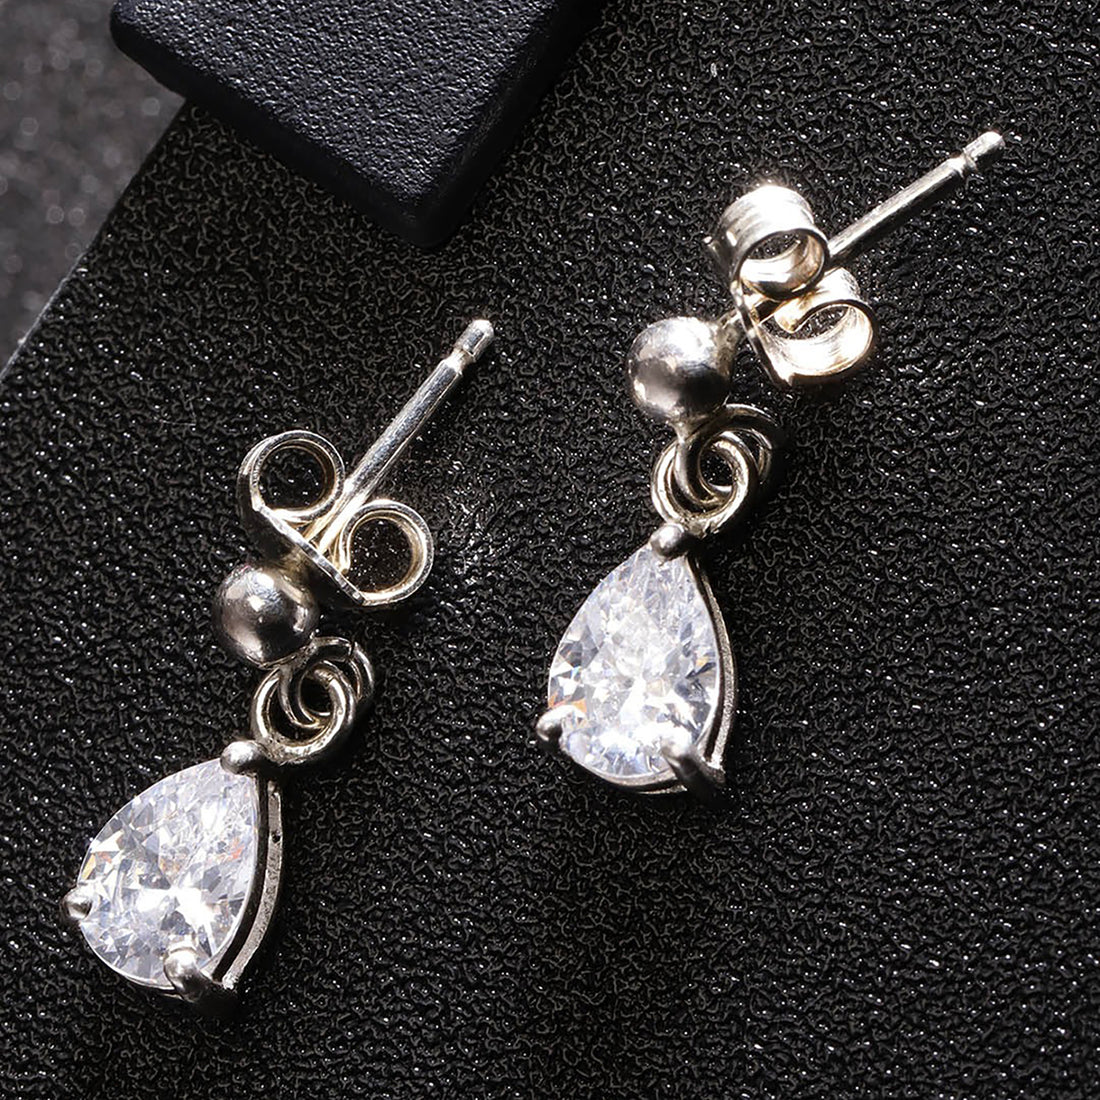 Carlton London 925 Sterling Silver Rhodium Plated Cz Drop Earring For Women